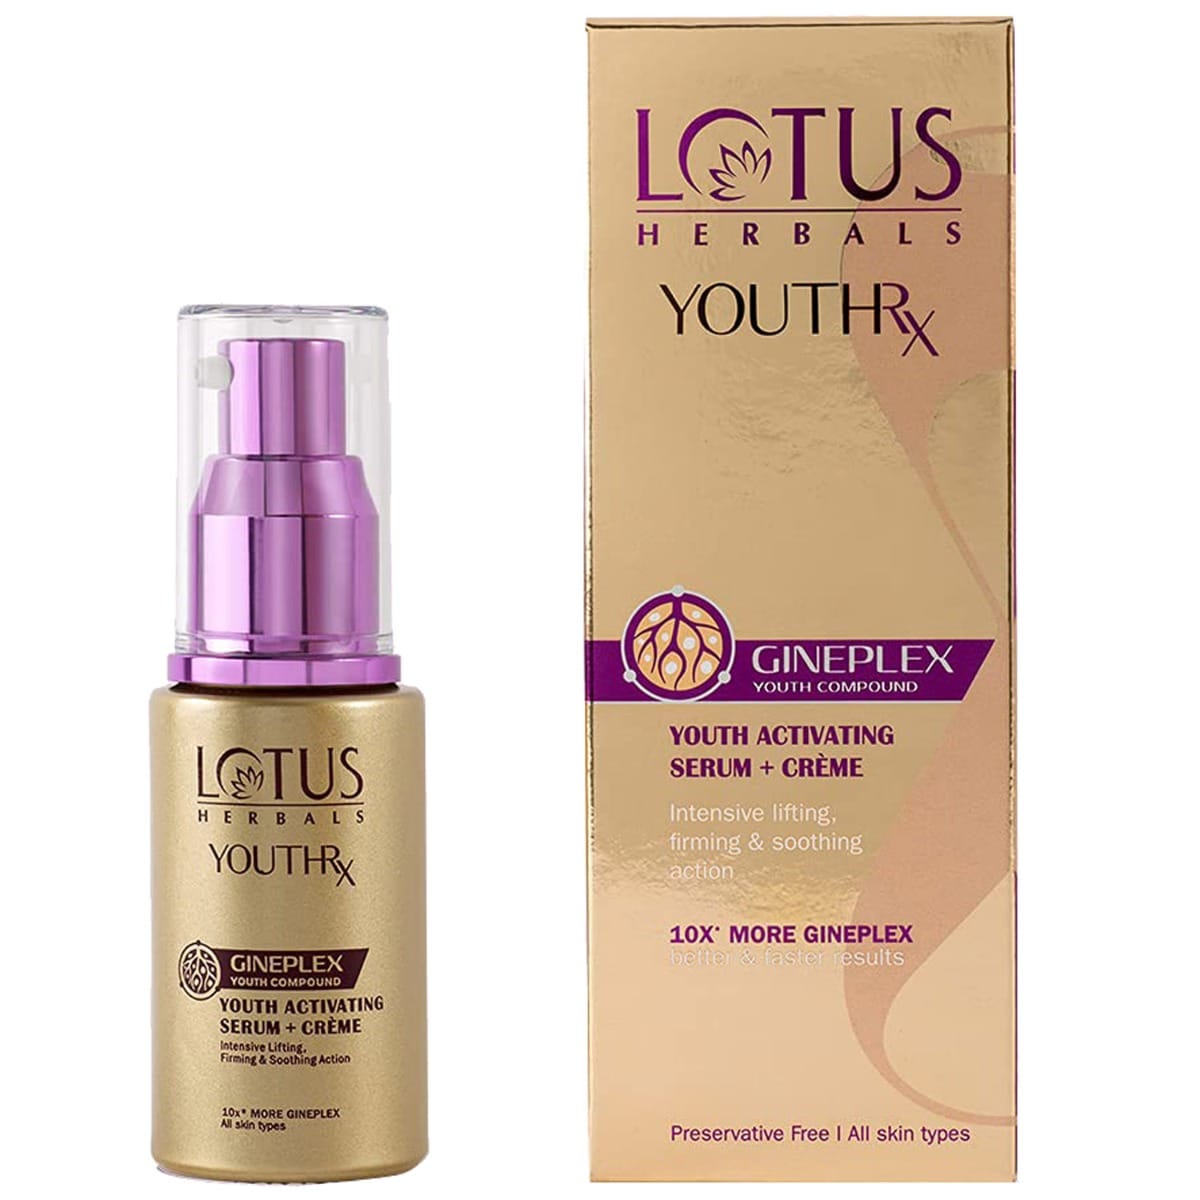 Lotus Herbals Youthrx Gineplex Youth Activating Serum + Creme (30 ml) Lotus Herbals